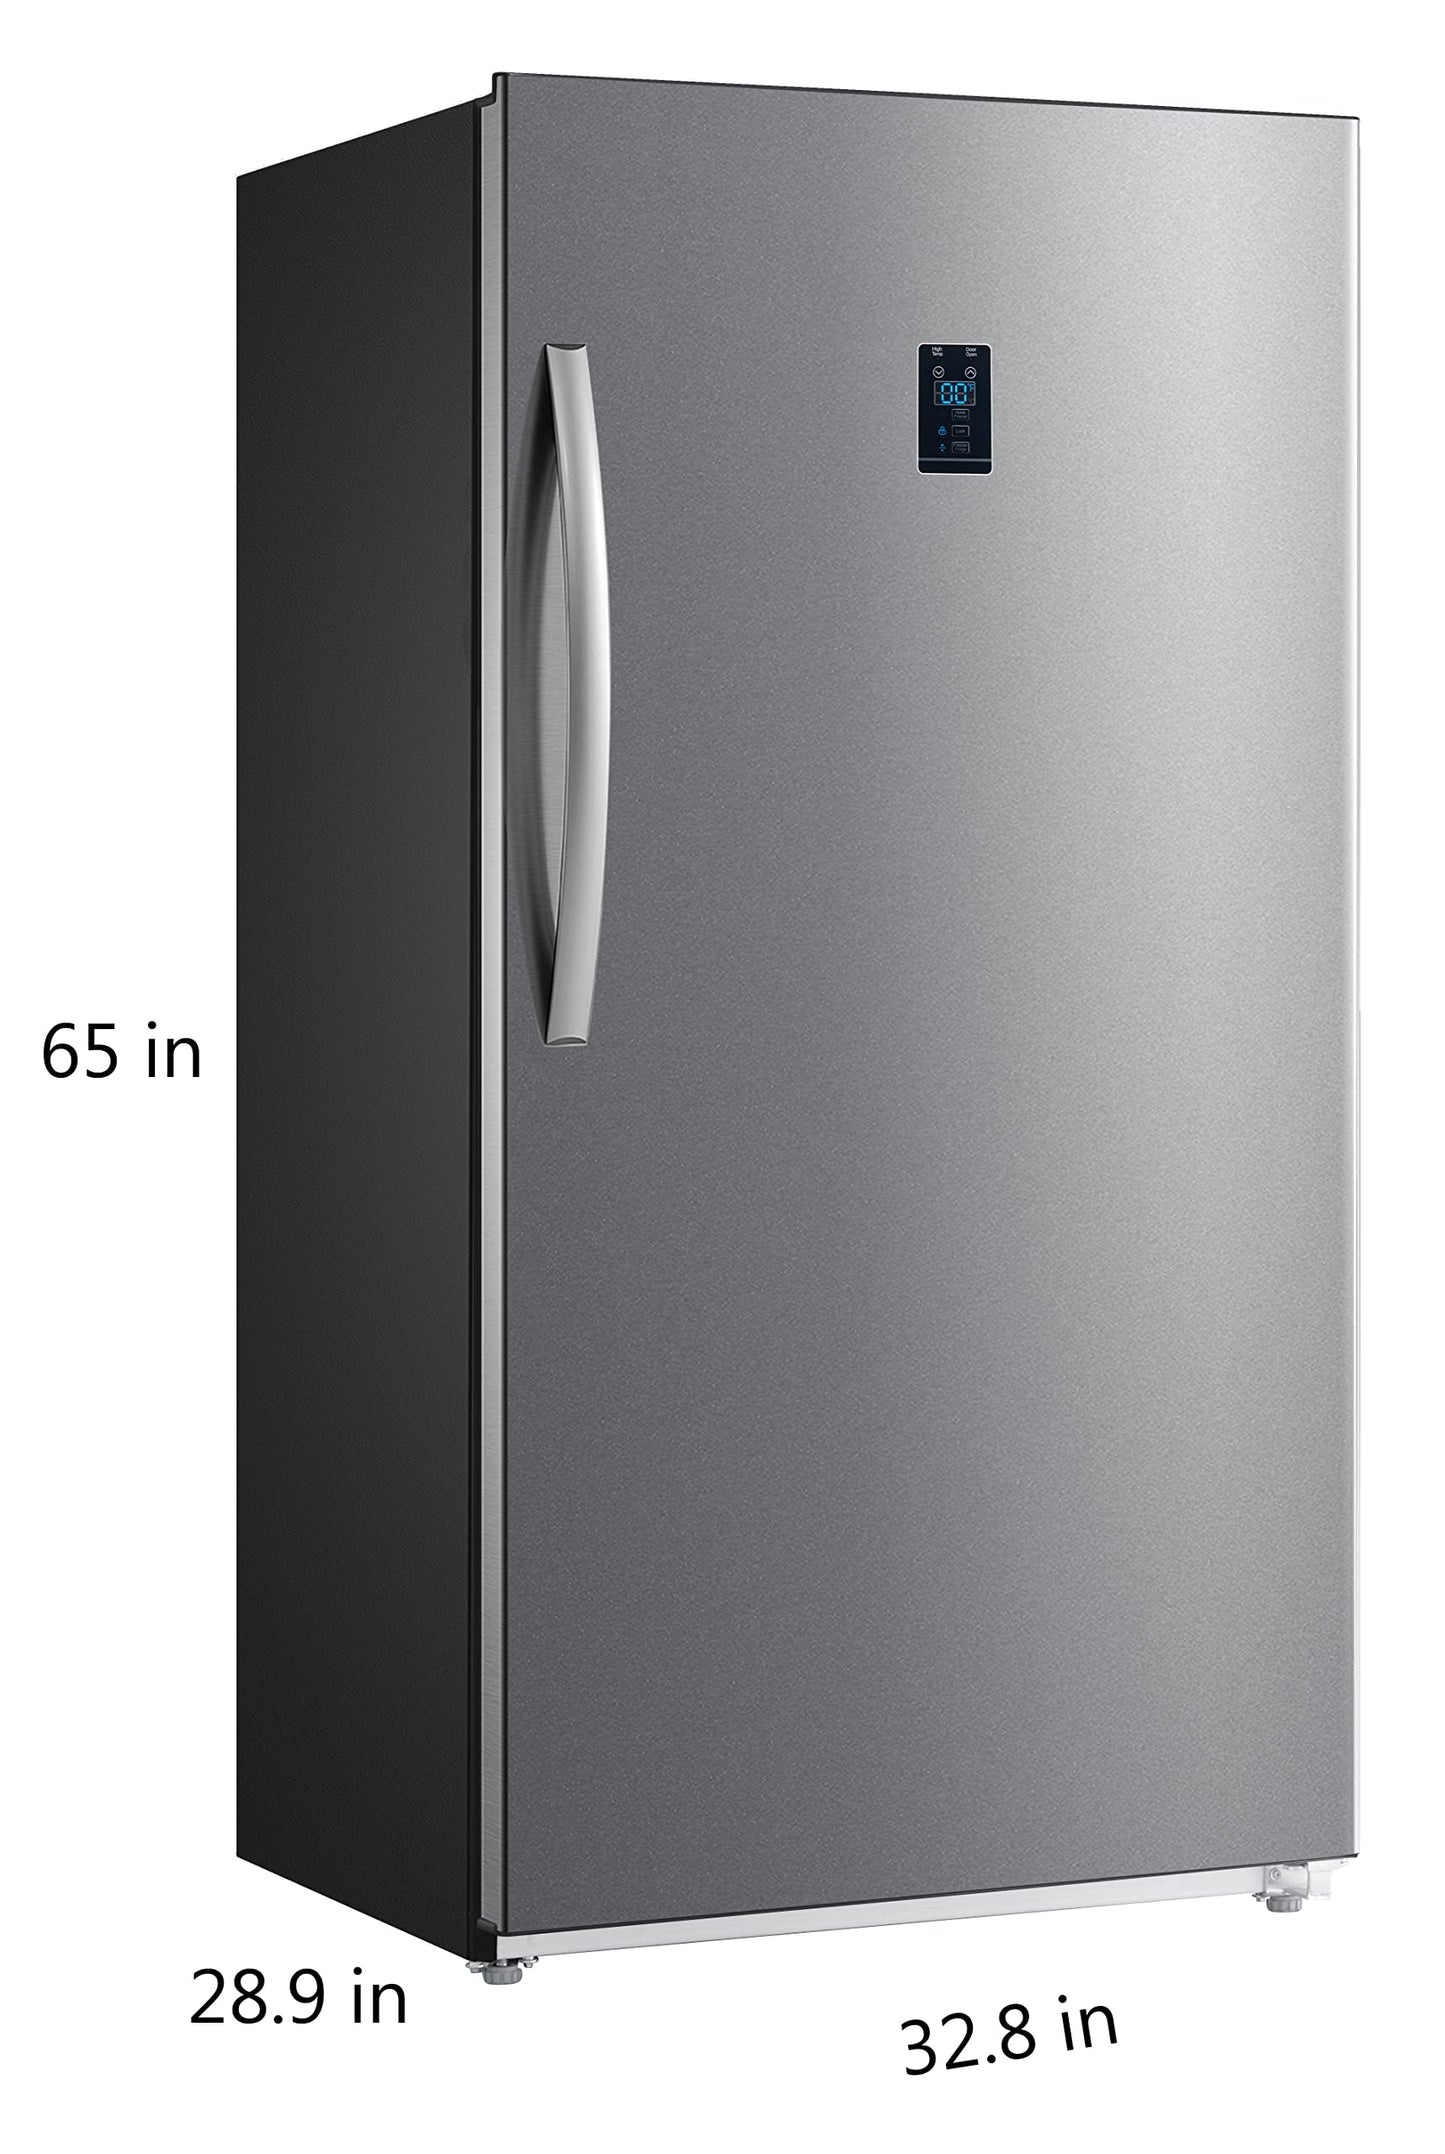 SMETA Upright Freezer Convertible Refrigerator|Freezers Garage Ready Standup Frost-Free Fridge Deep Freezer 18 Cuft Full Size with Tempered Glass Shelves SS